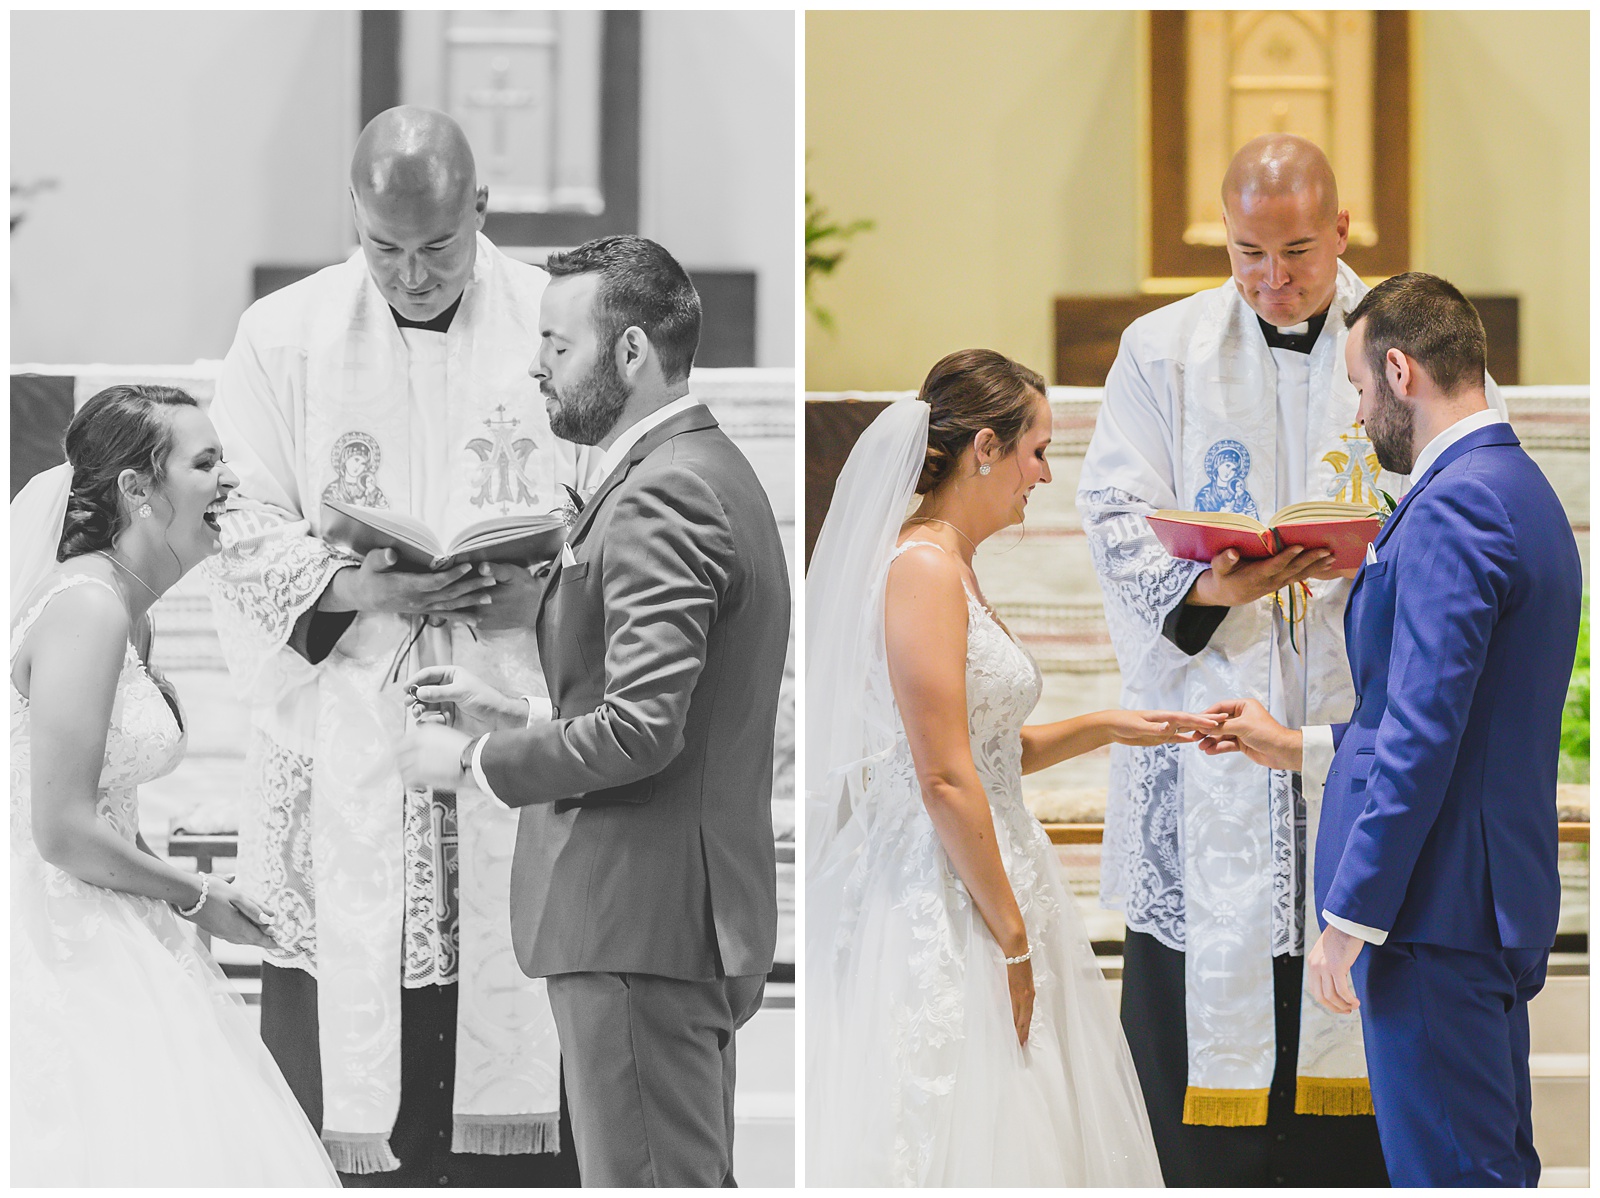 Wedding photography at St. Thomas More Catholic Church by Kansas City wedding photographers Wisdom-Watson Weddings.